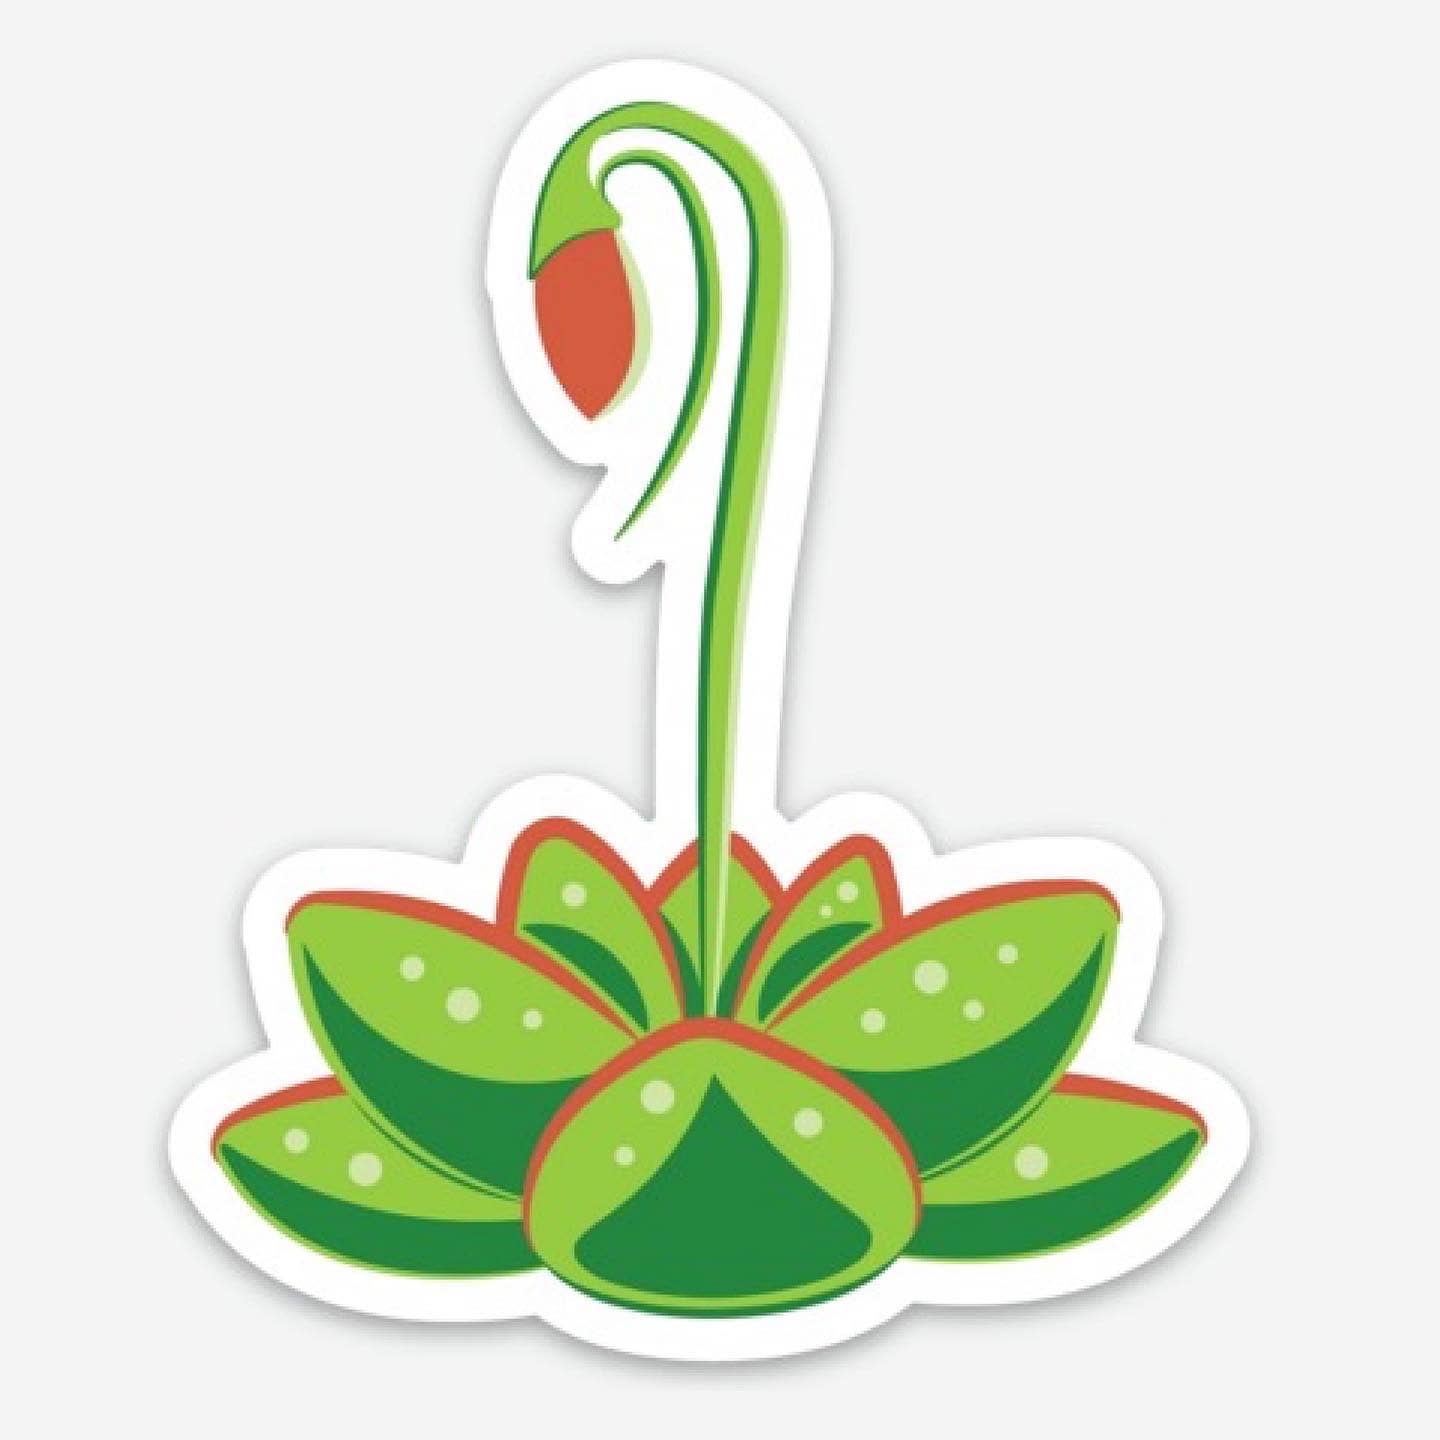 A sticker of a Pinguicula plant